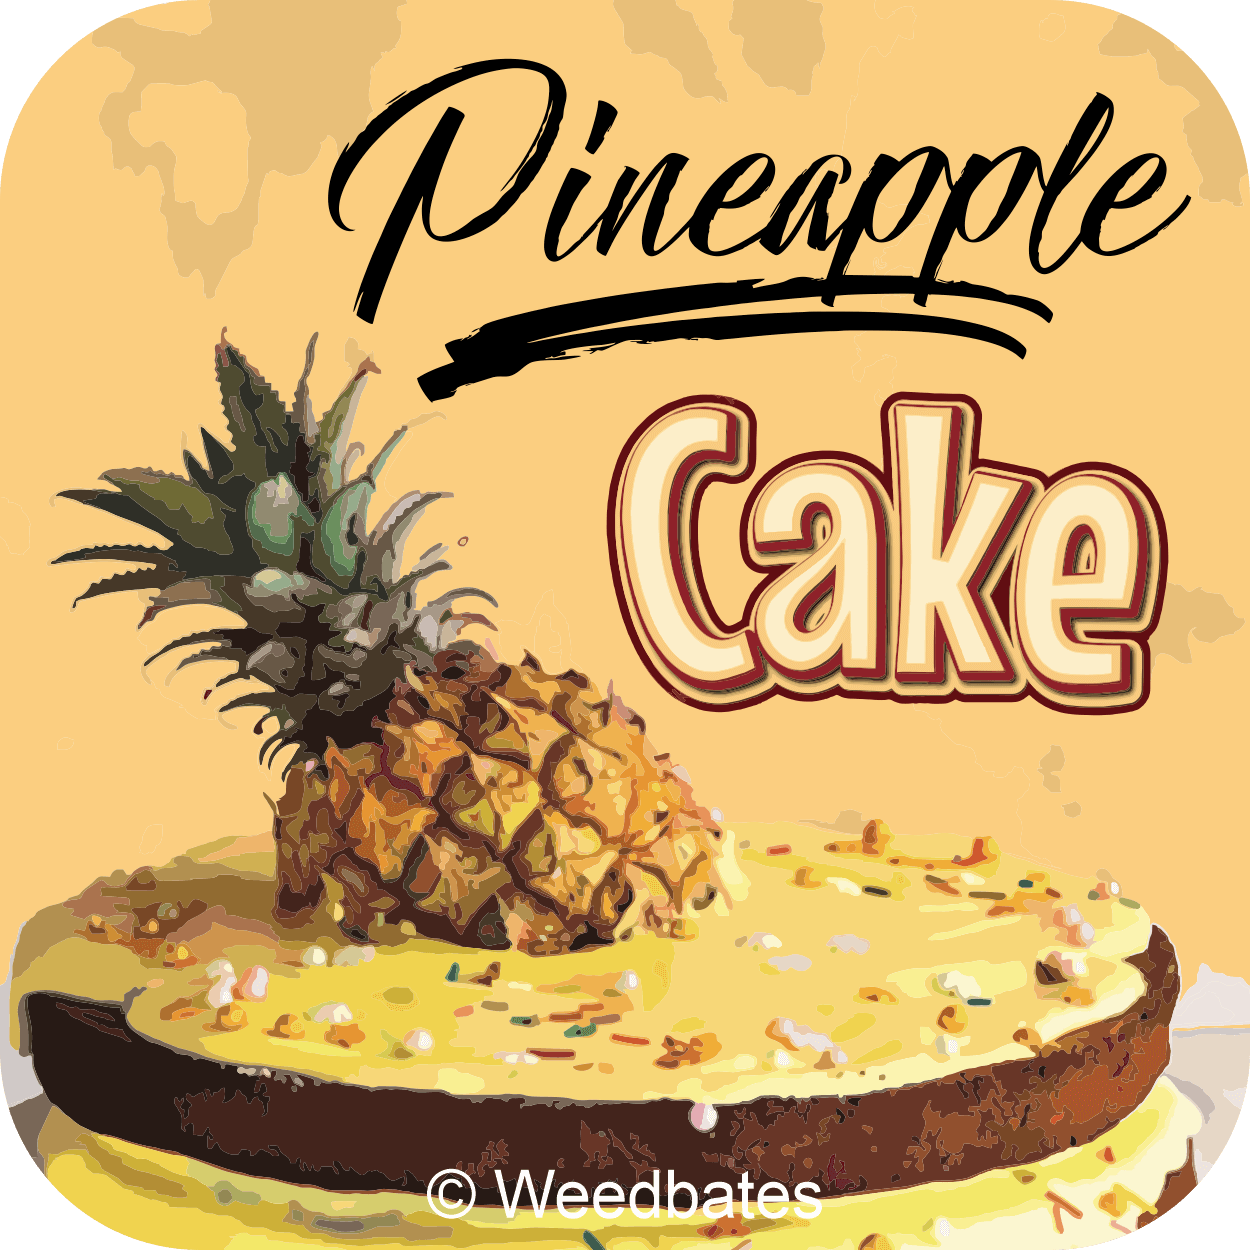 Pineapple Cake weed 